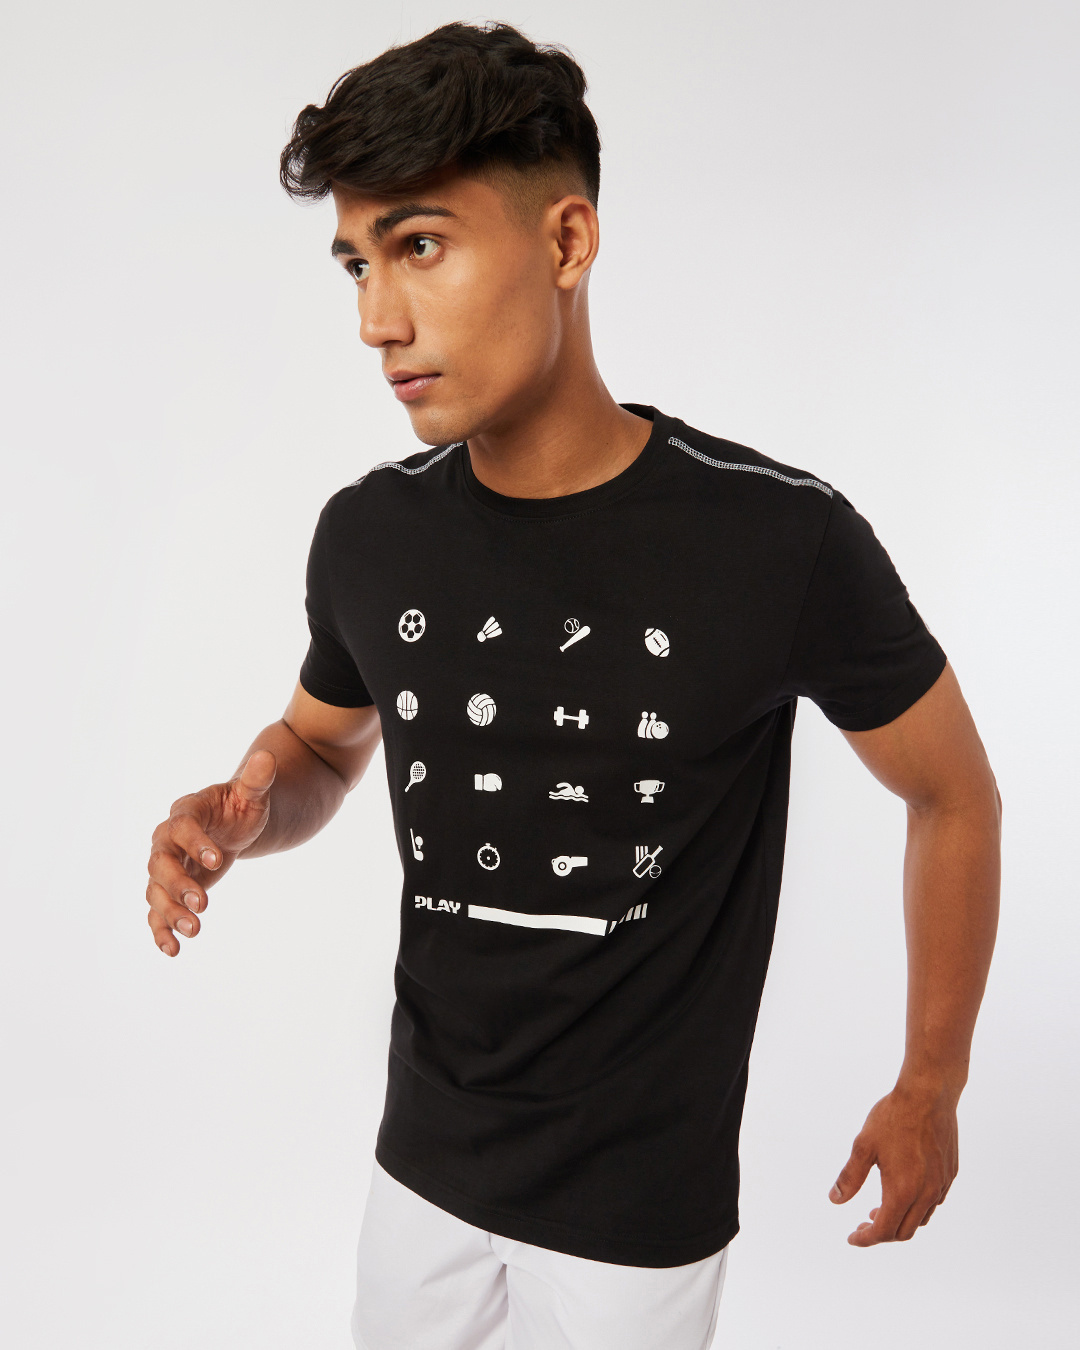 Buy Men's Black Typography Printed T-shirt Online at Bewakoof